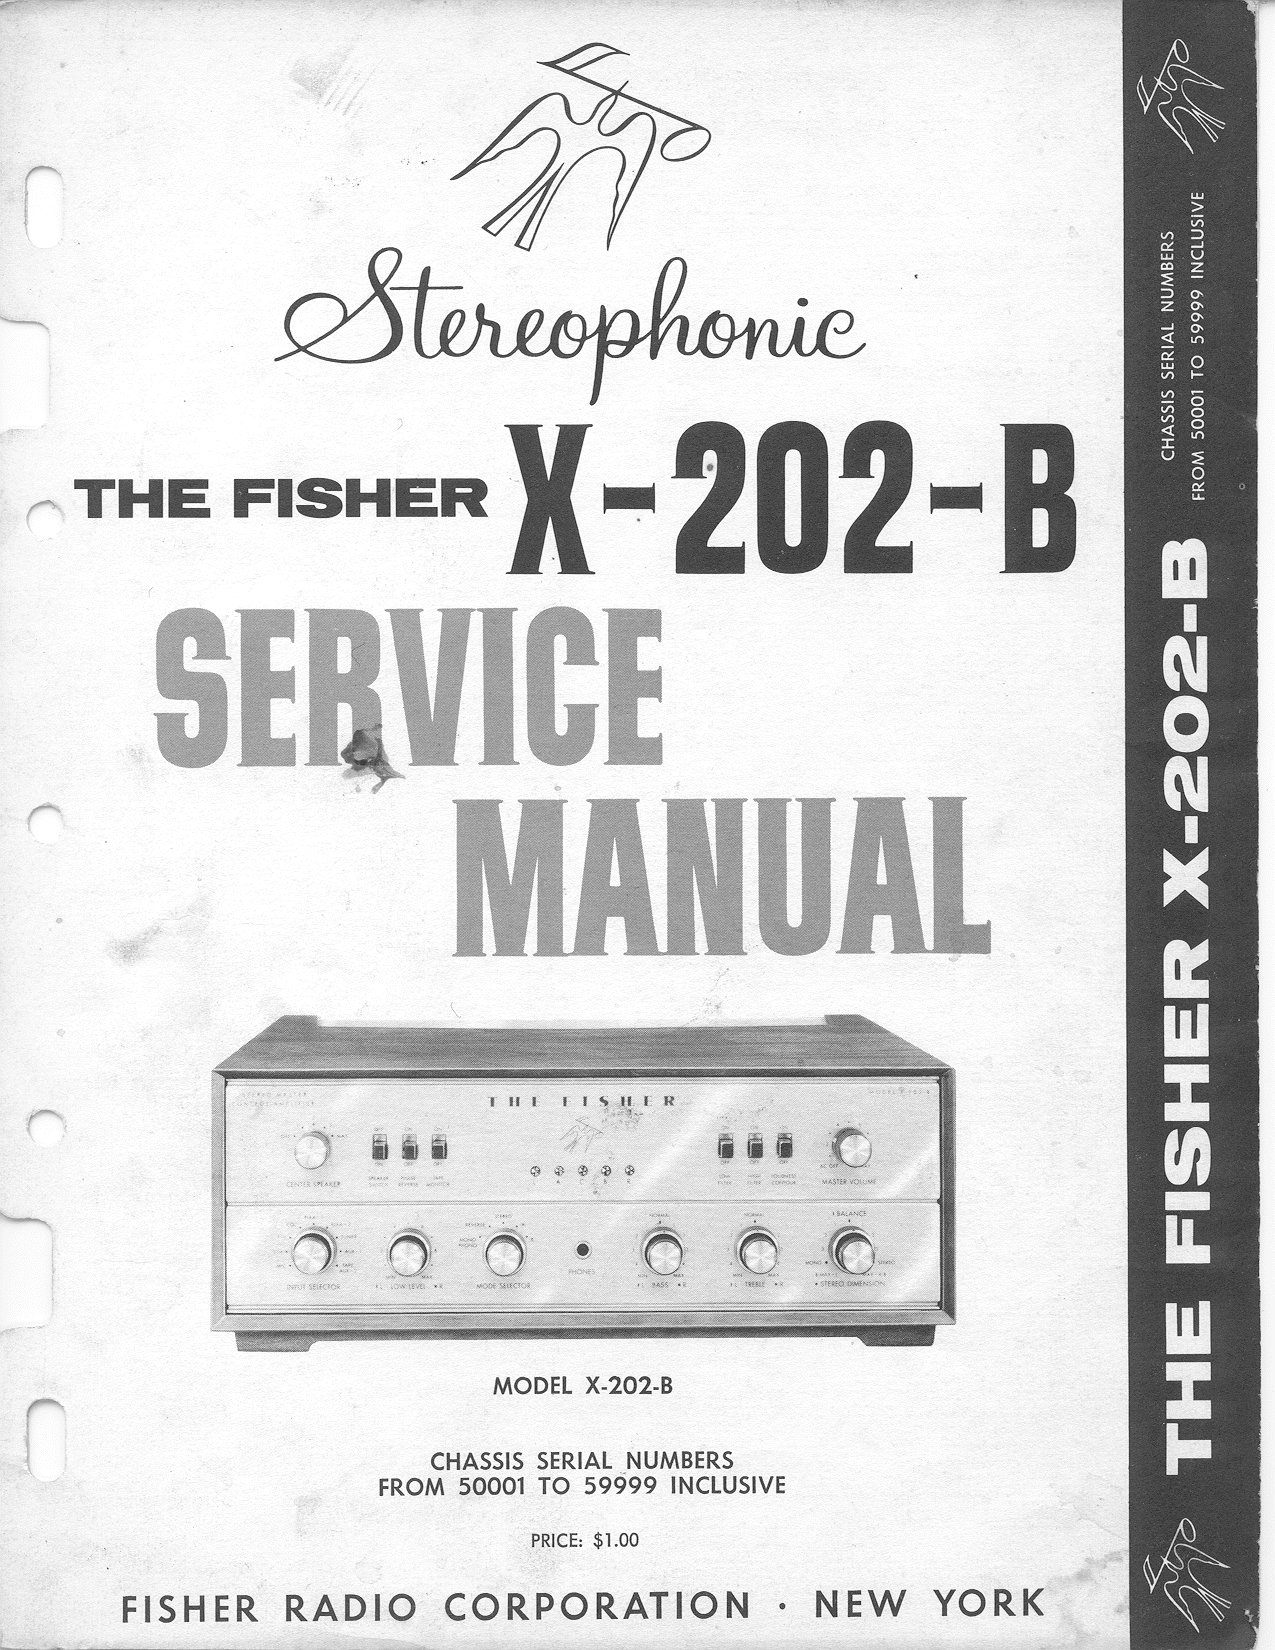 Fisher x 202 b service manuals